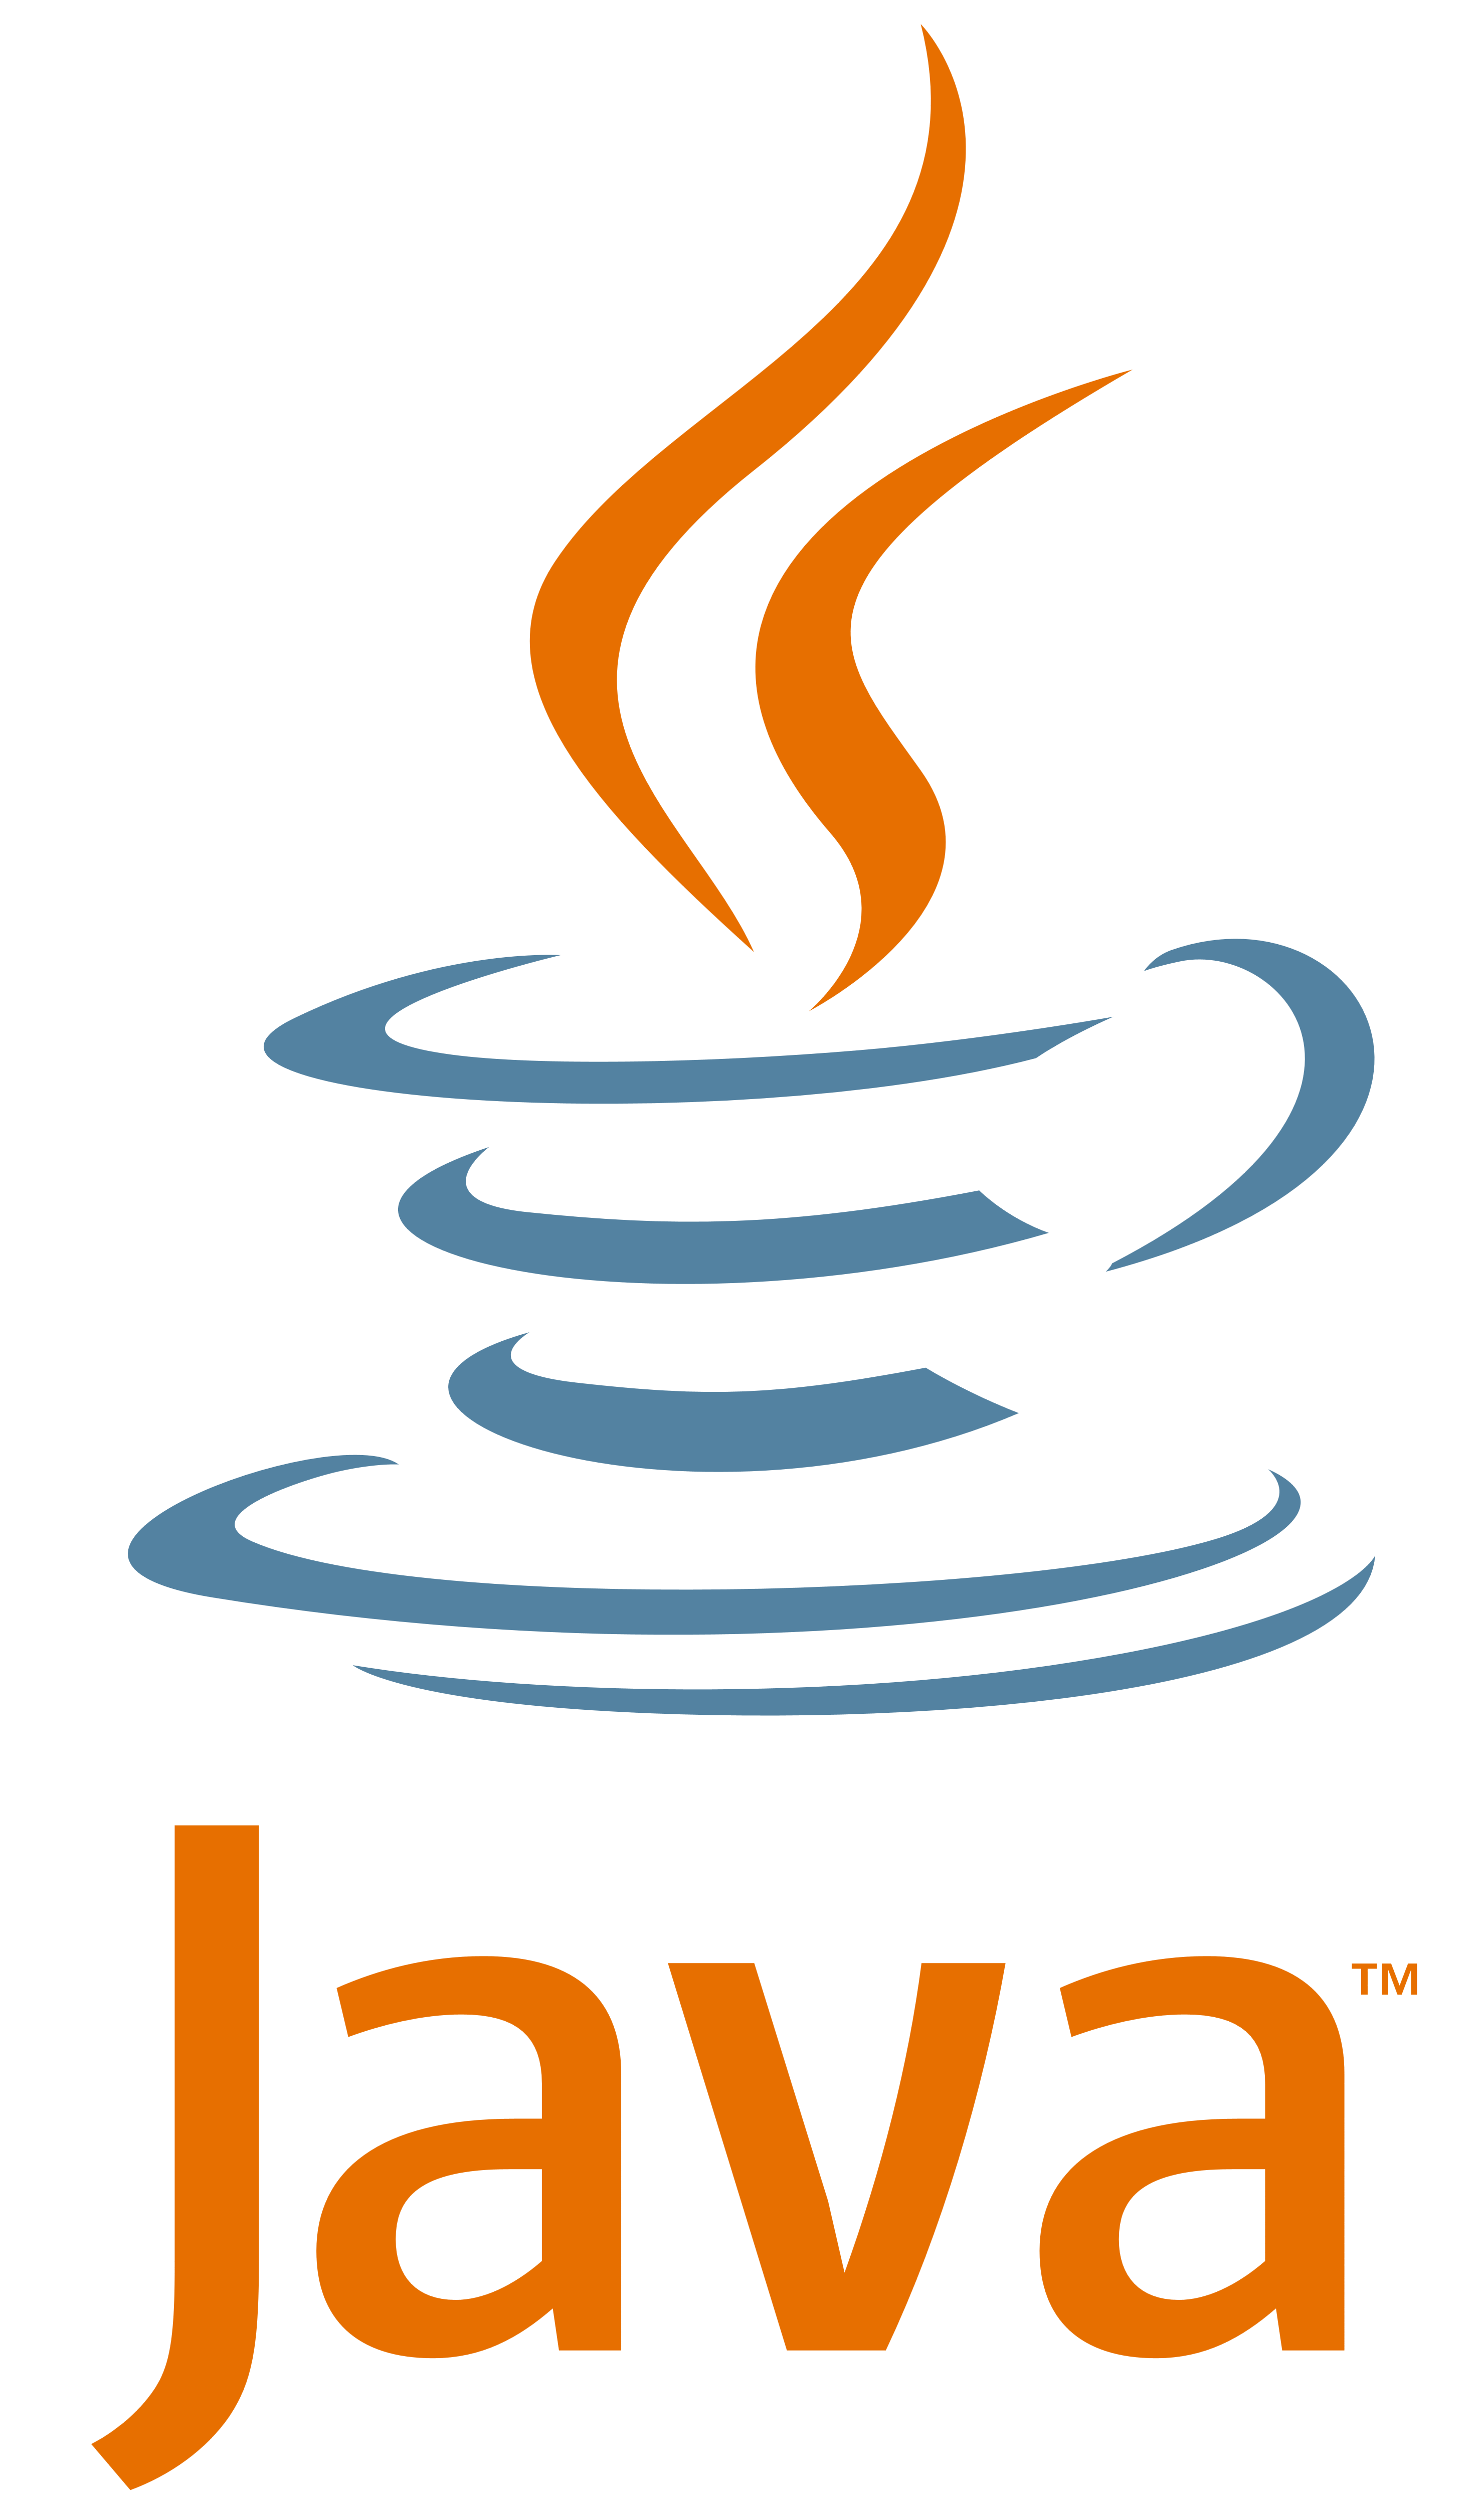 JMX (Java)